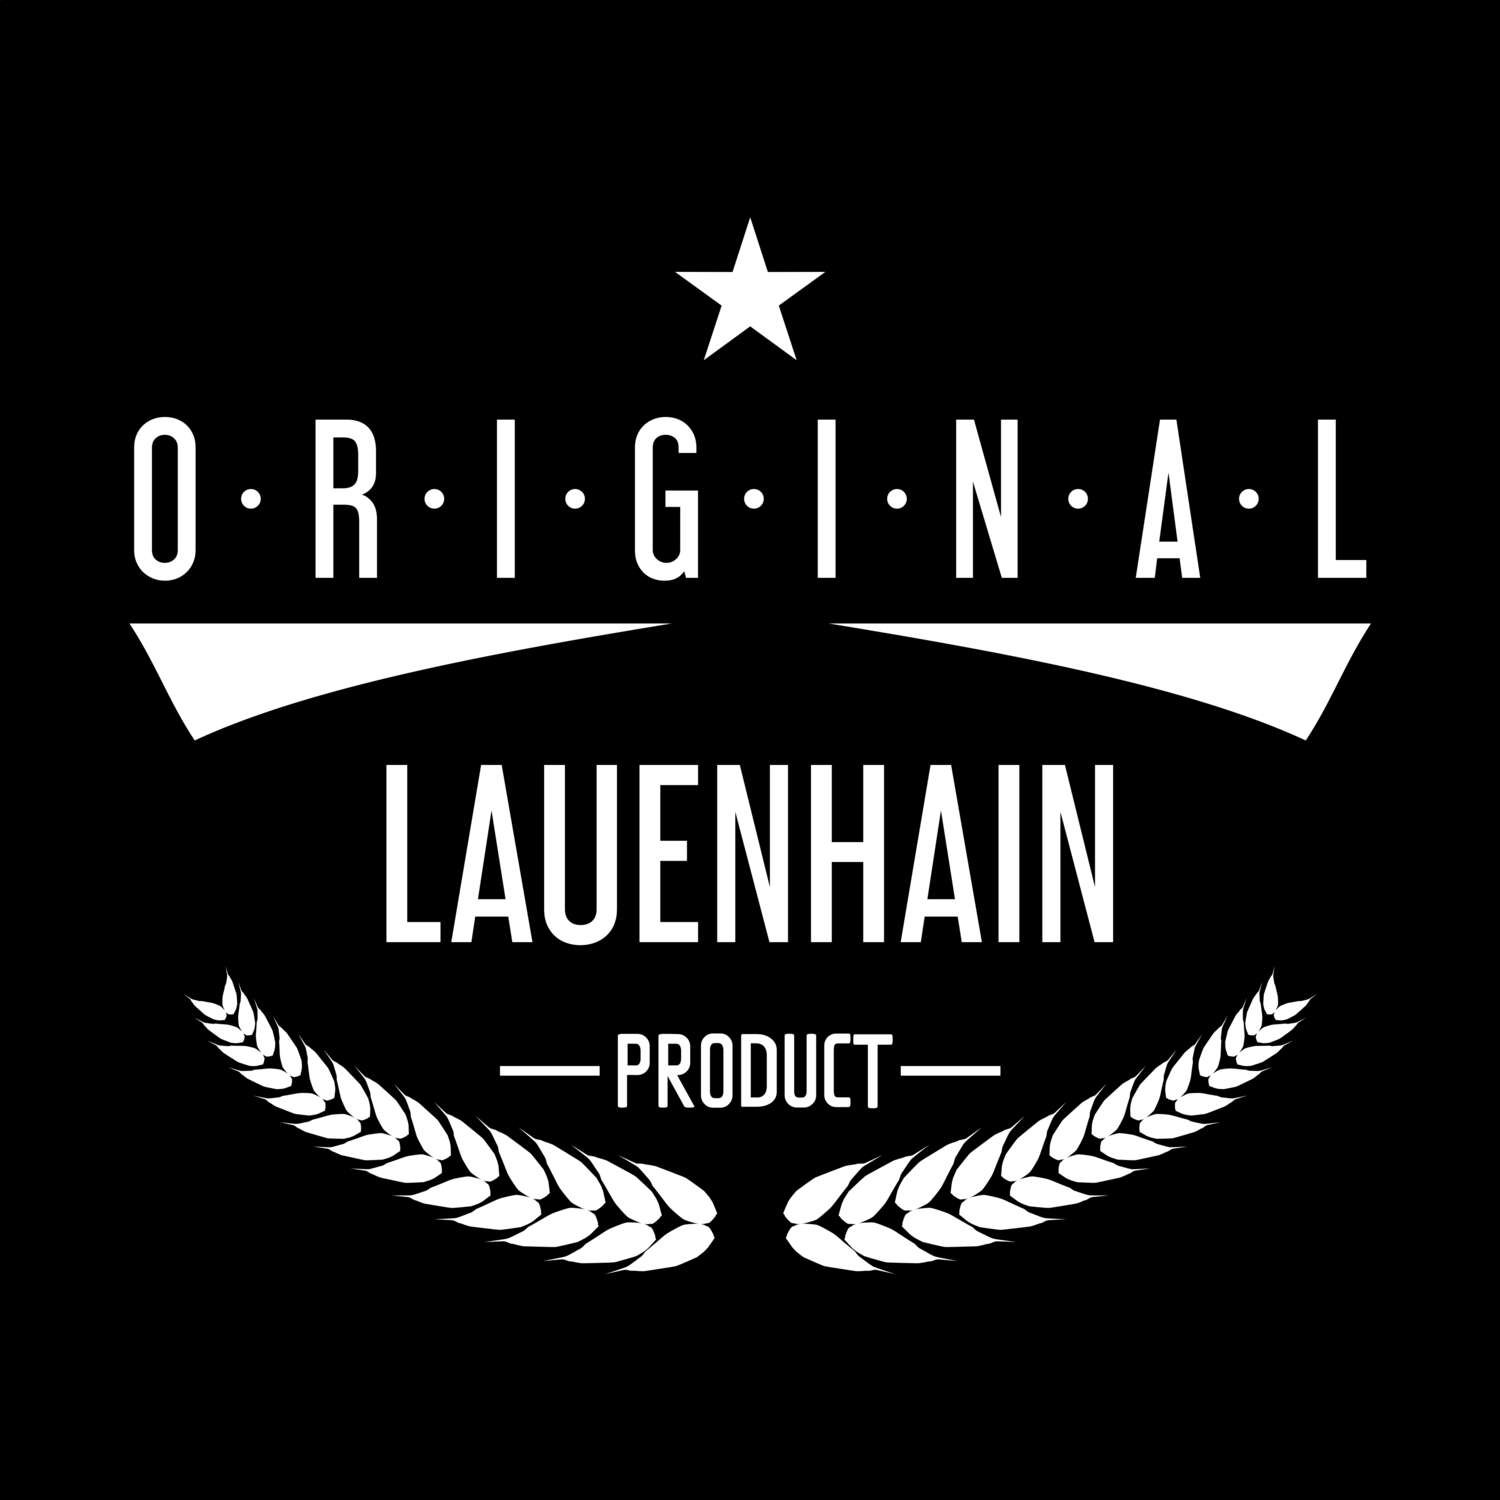 Lauenhain T-Shirt »Original Product«